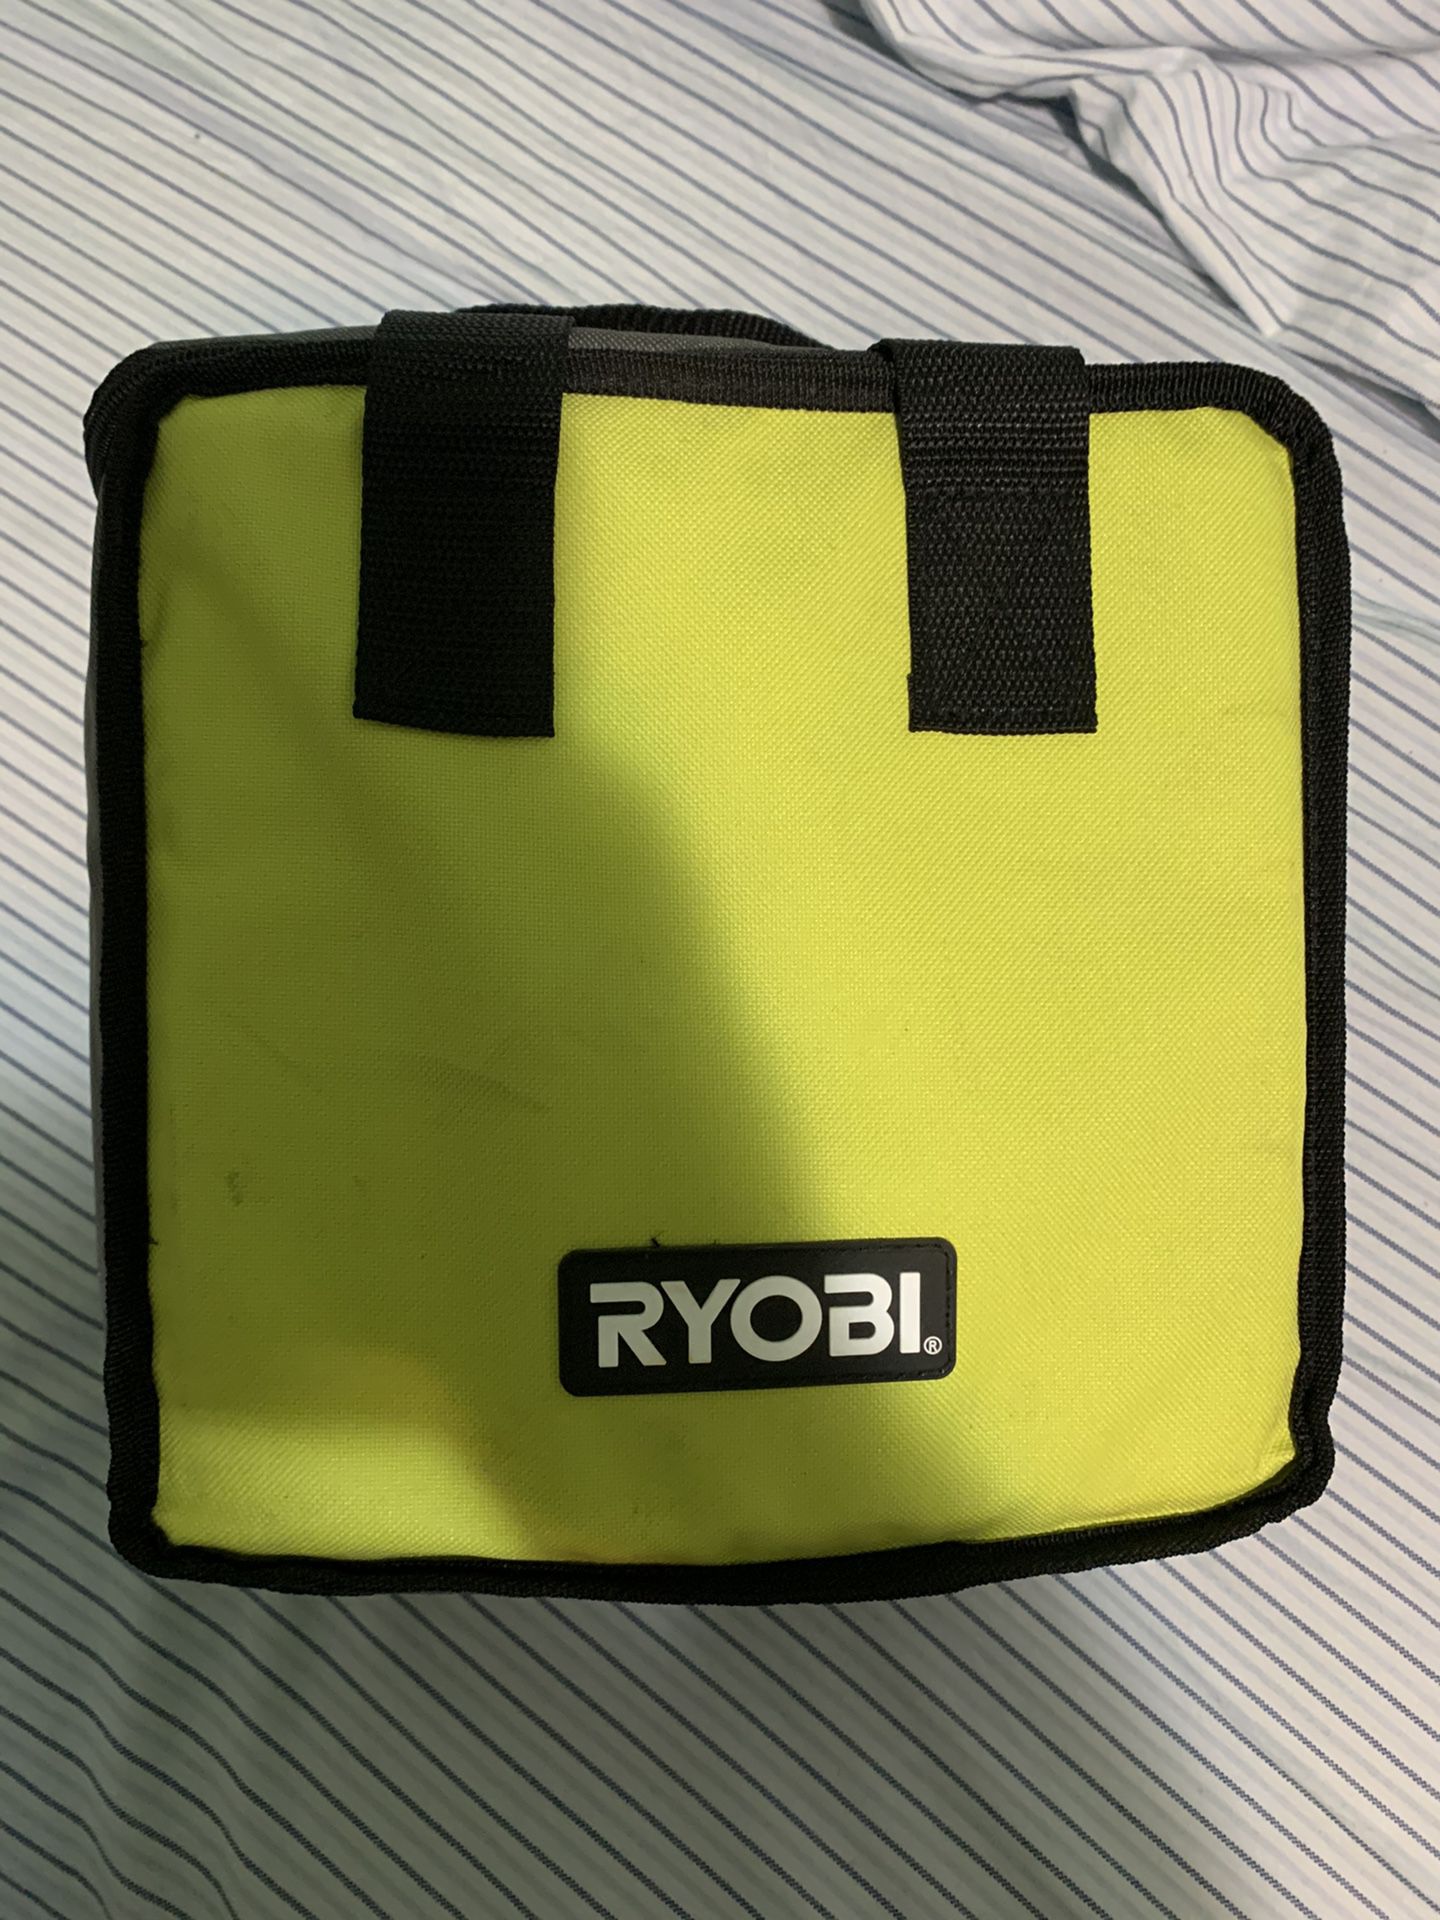 RYOBI drill kit